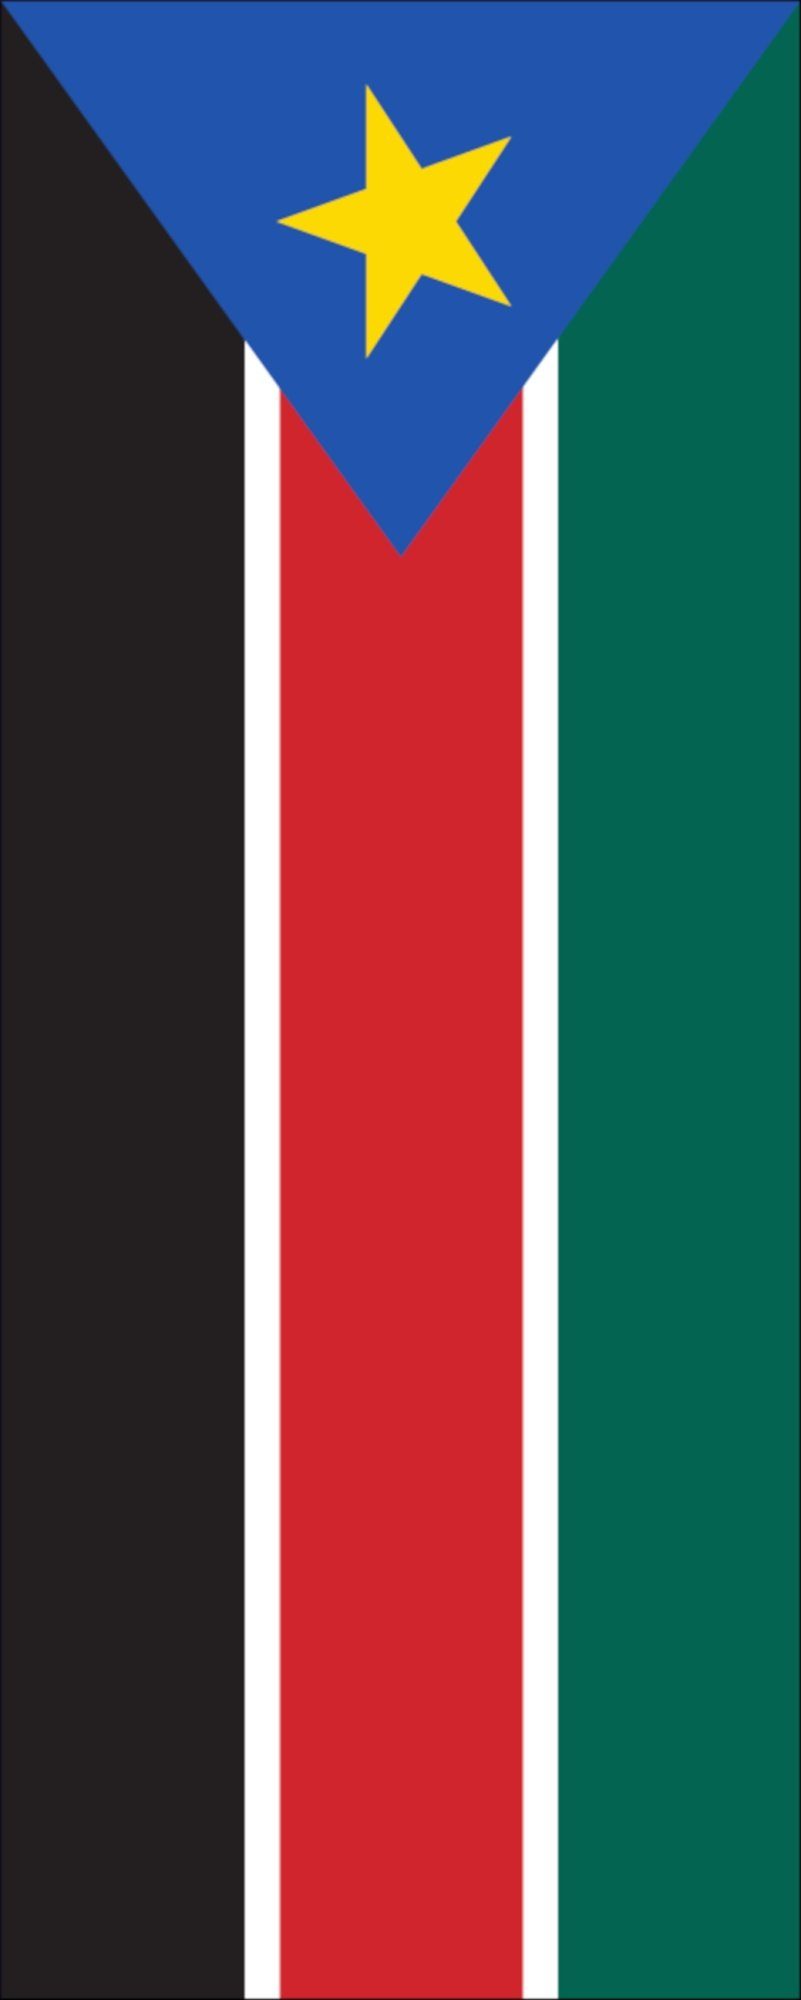 Flagge Flagge g/m² 110 Südsudan Hochformat flaggenmeer